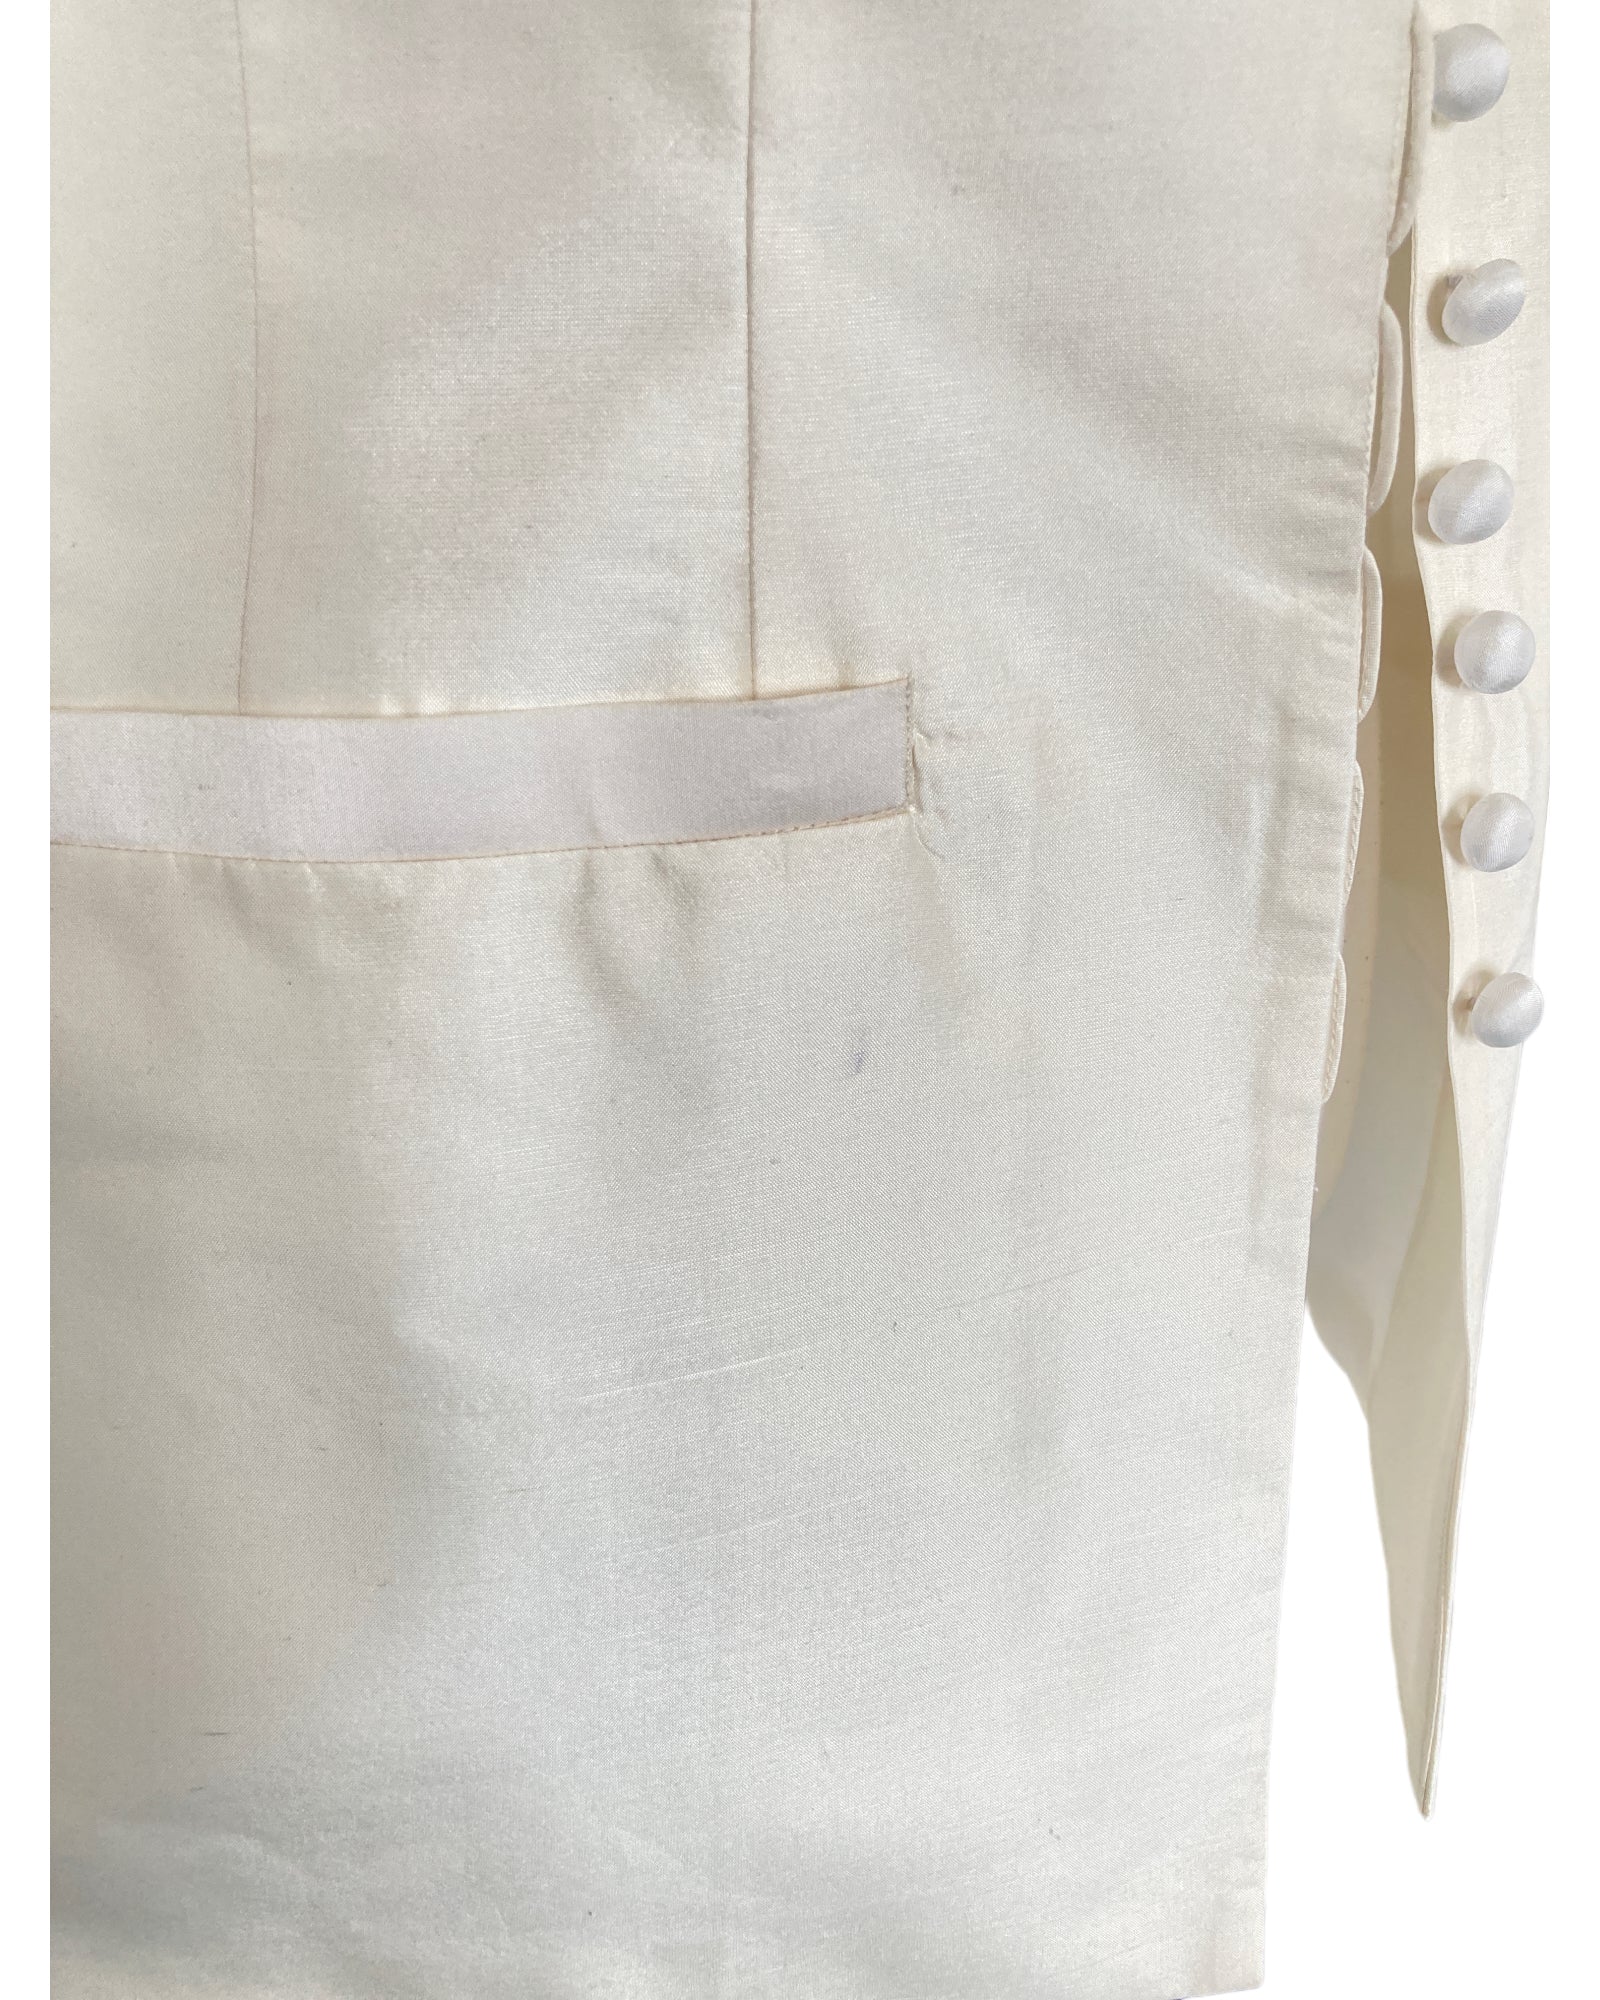 Richard K Tsao White Silk Jacket, S